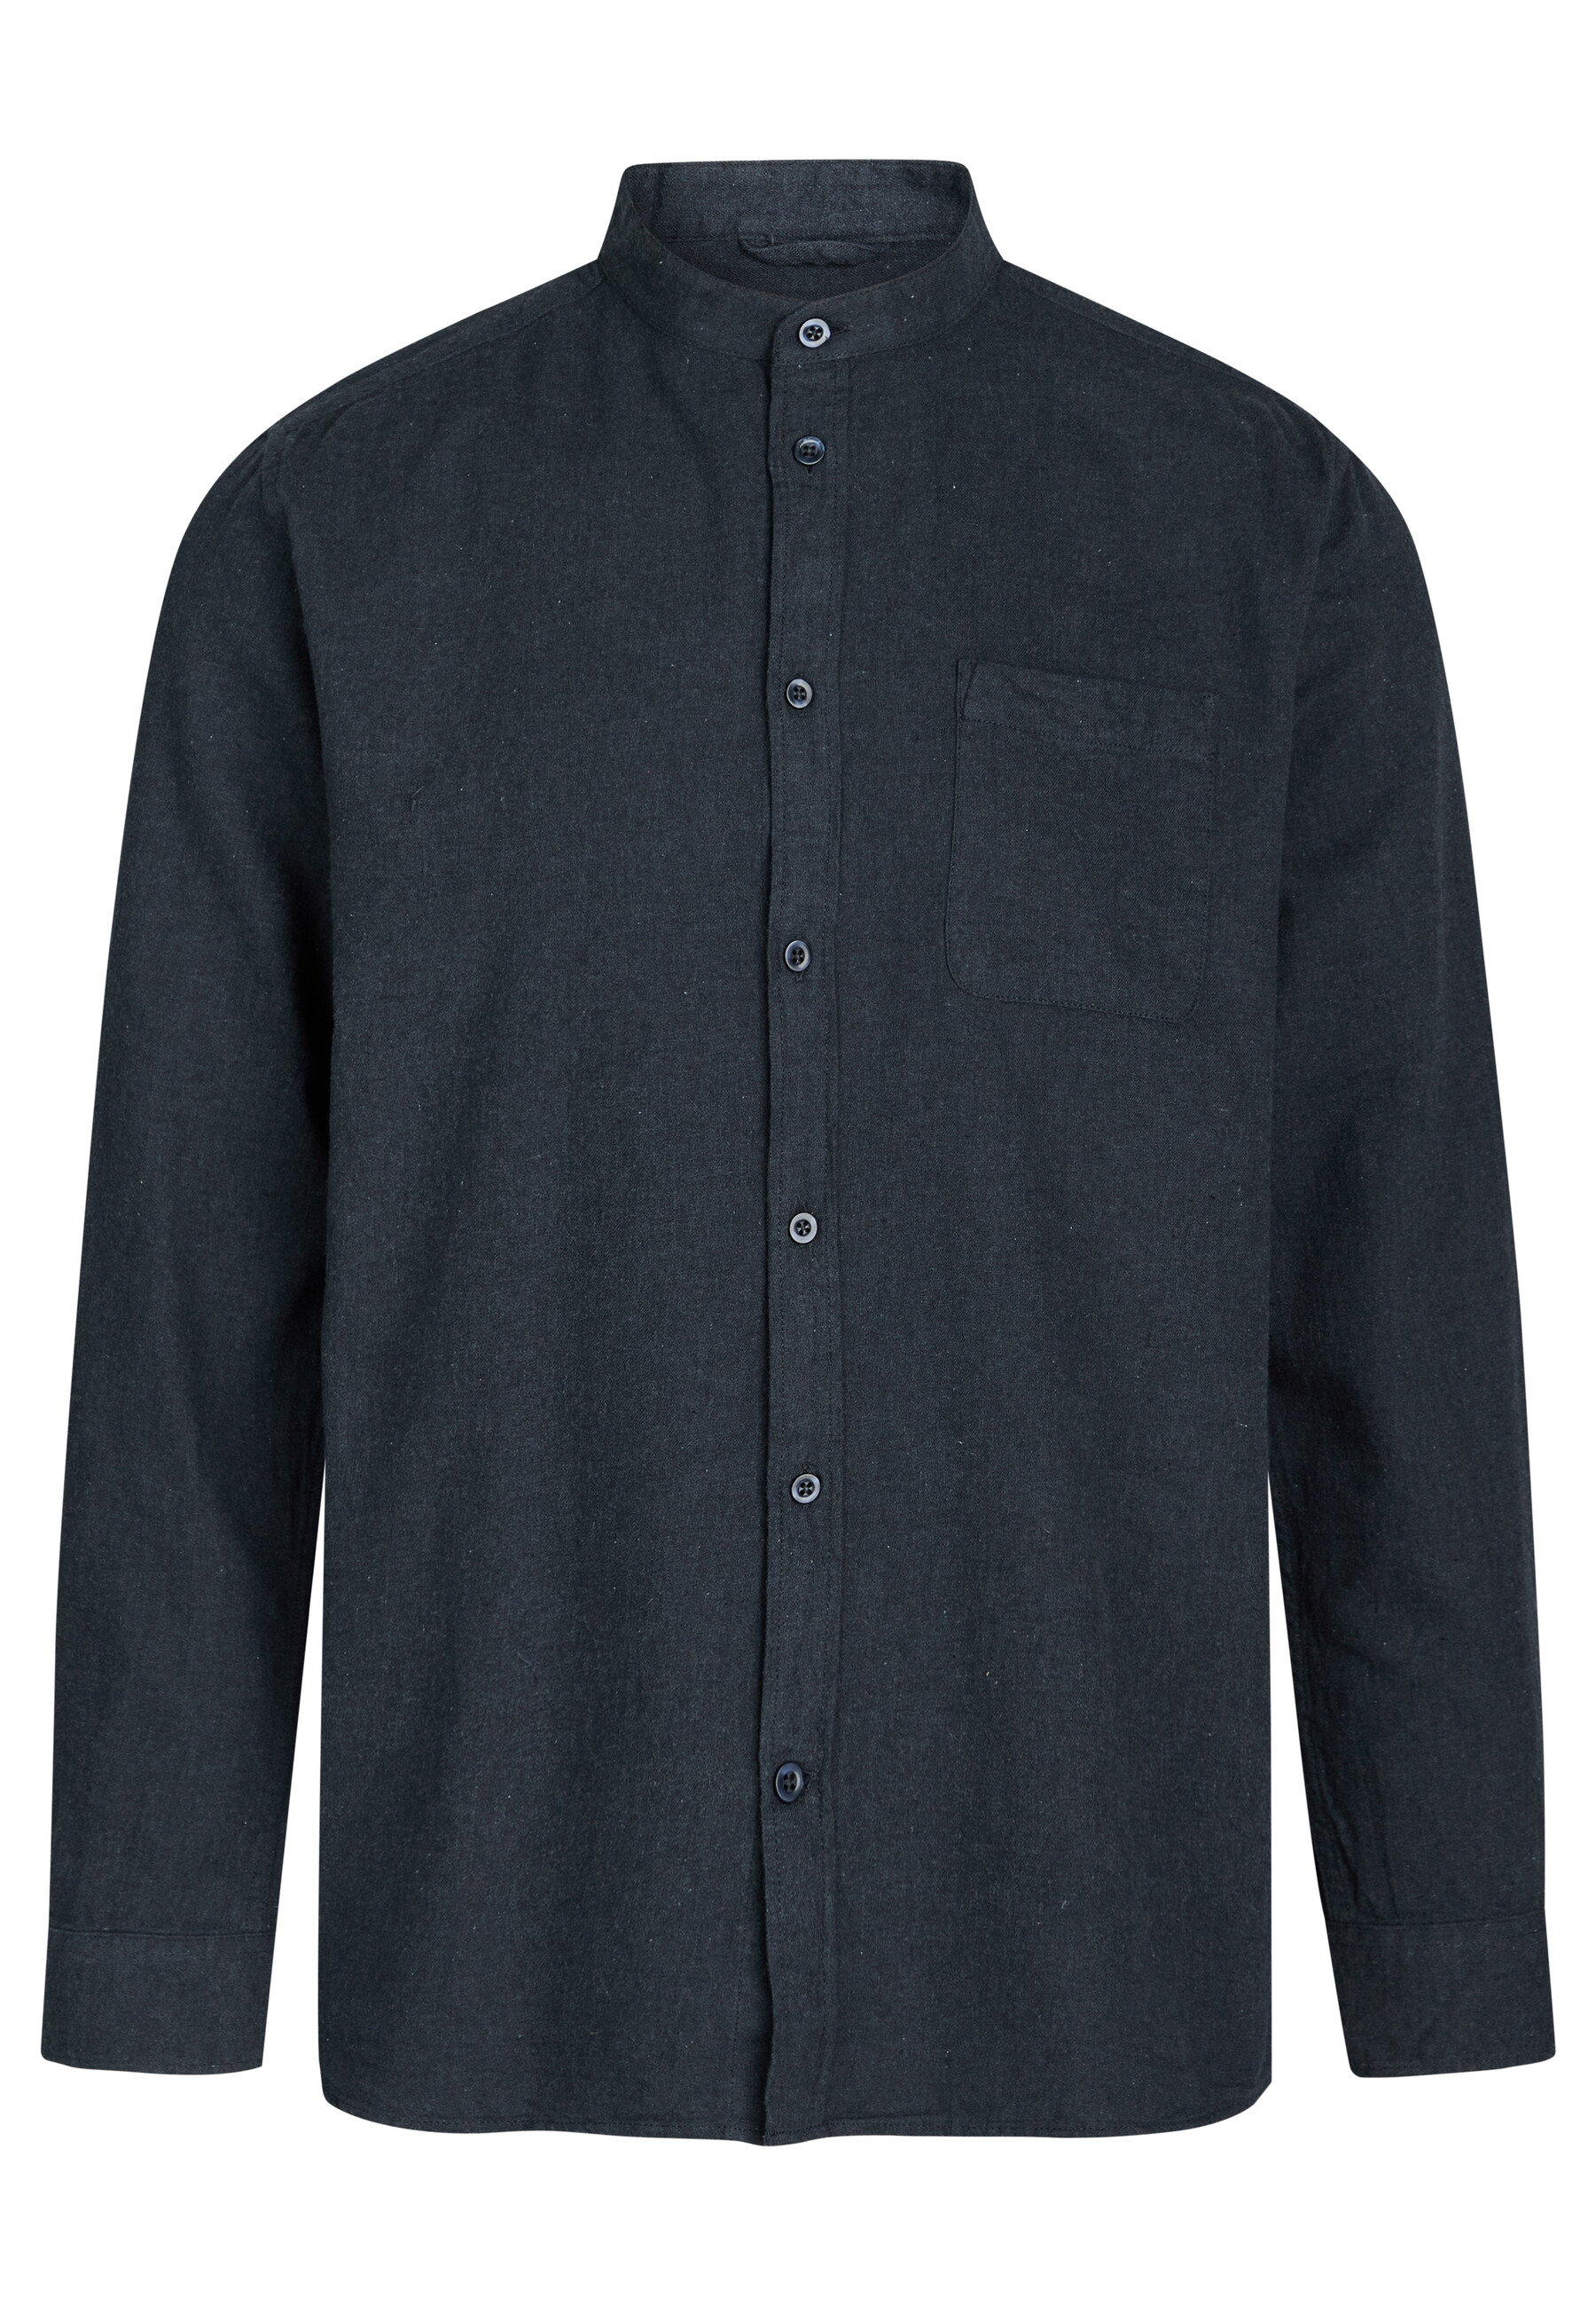 Knowledge Cotton Apparel  90891 Melangé Flannel Stand Collar Custom Fit Shirt Total Eclipse